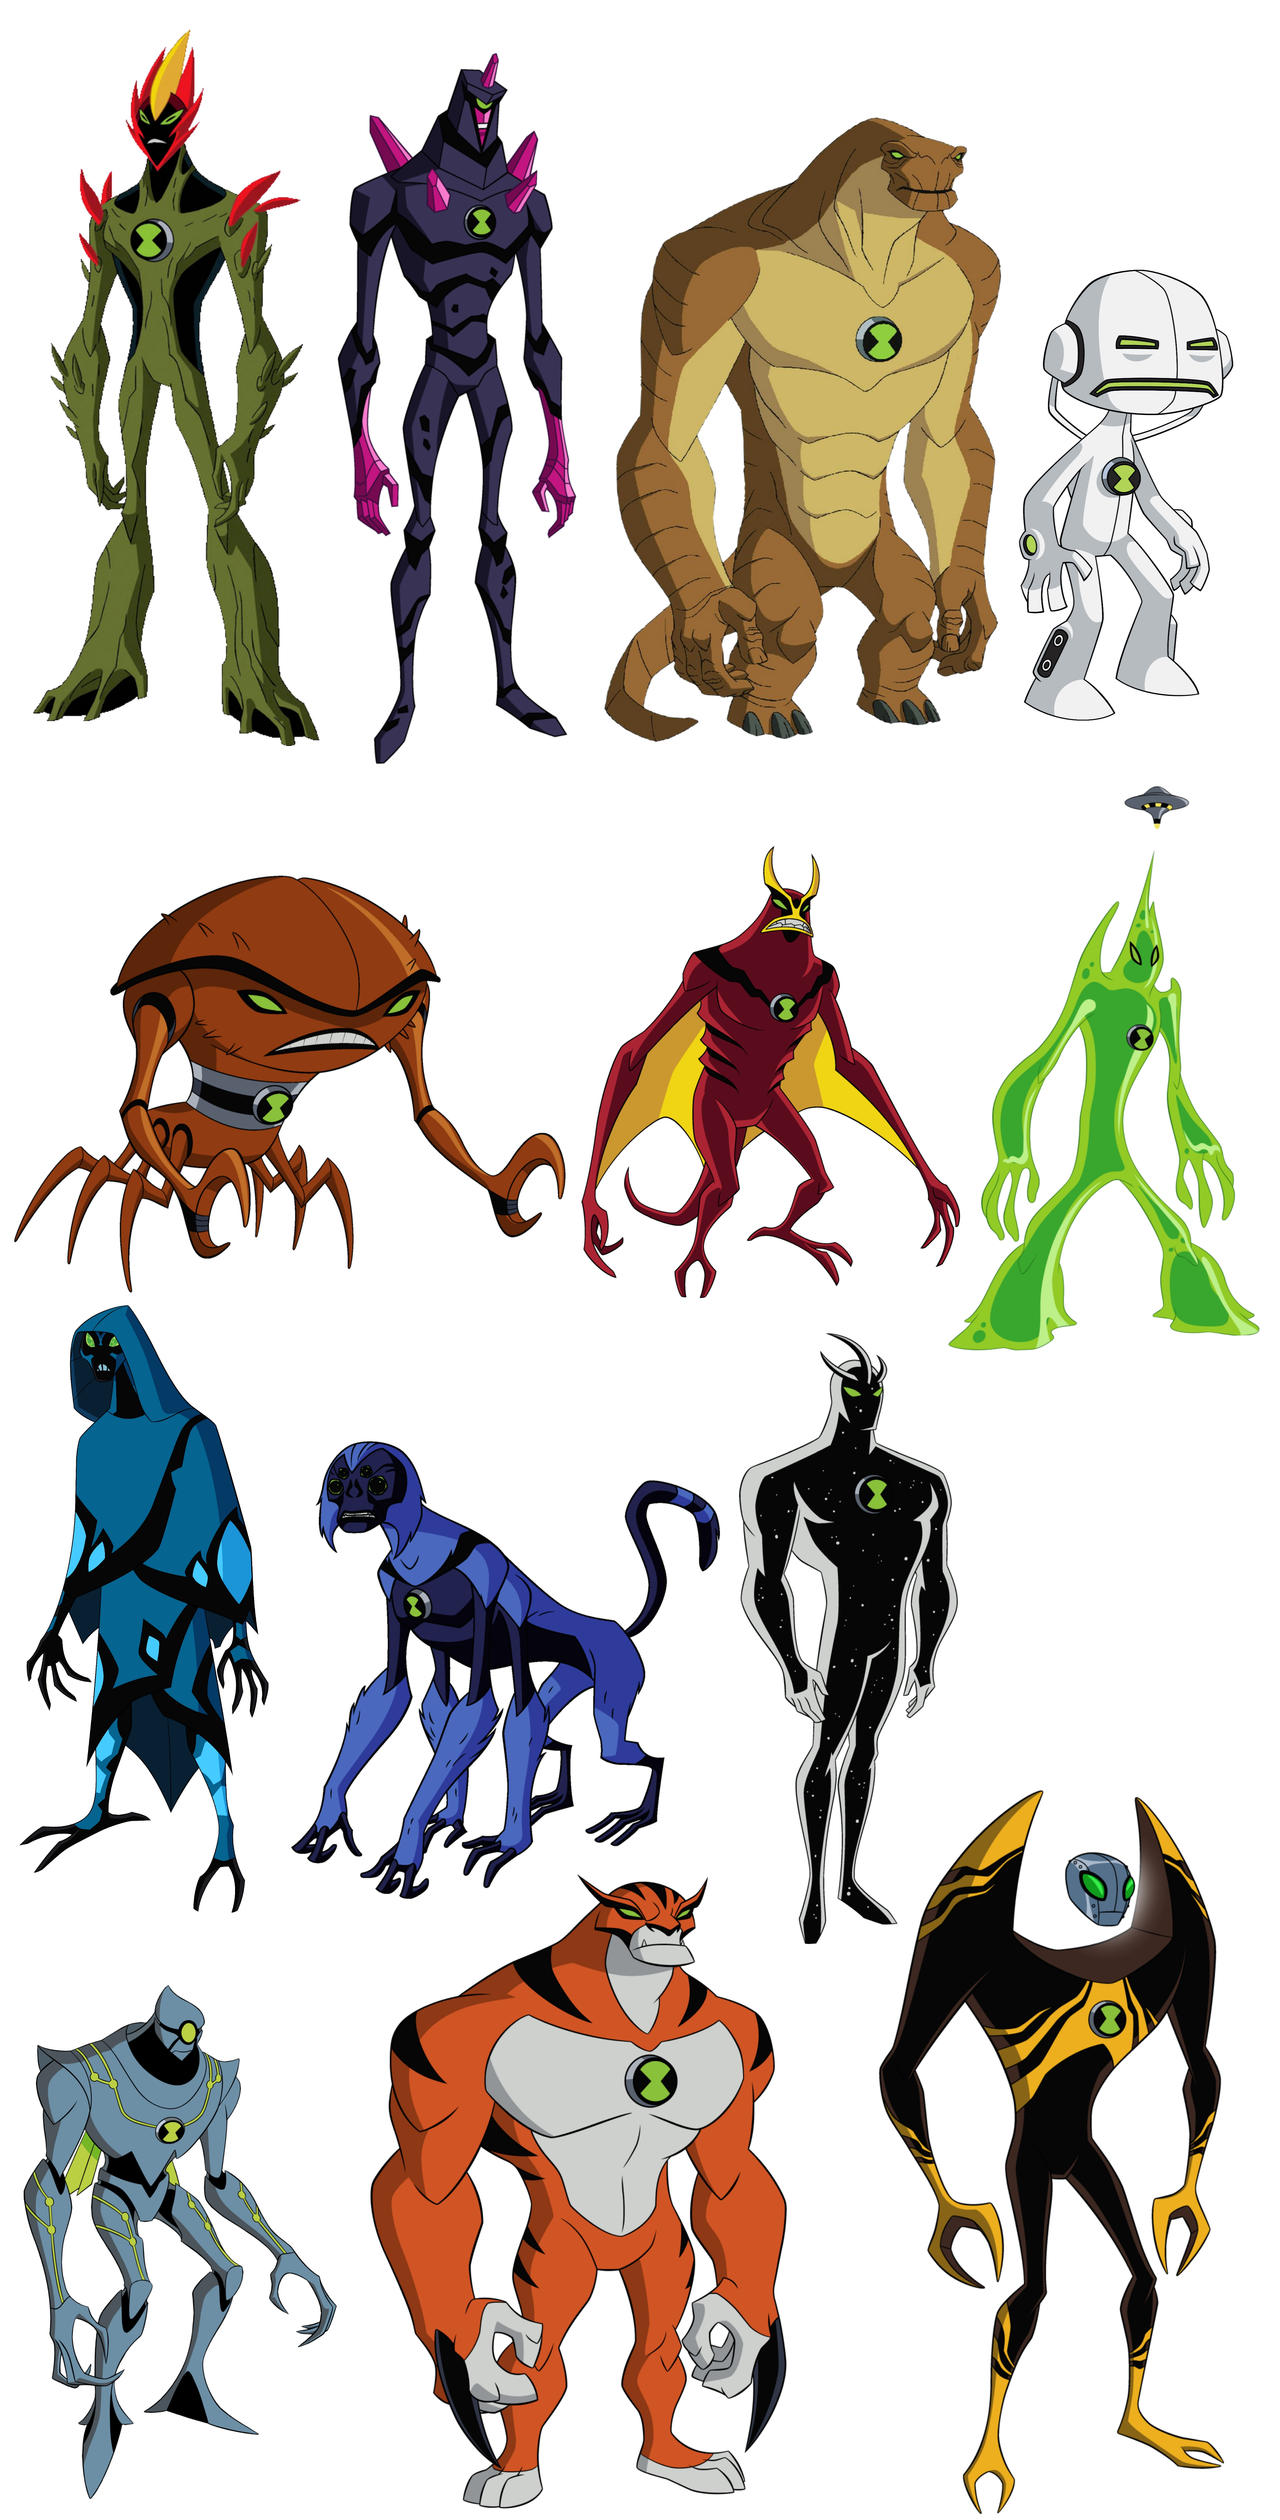 Ben 10 Ultimate Alien (Redesigned Aliens) by ChemistryChandra on